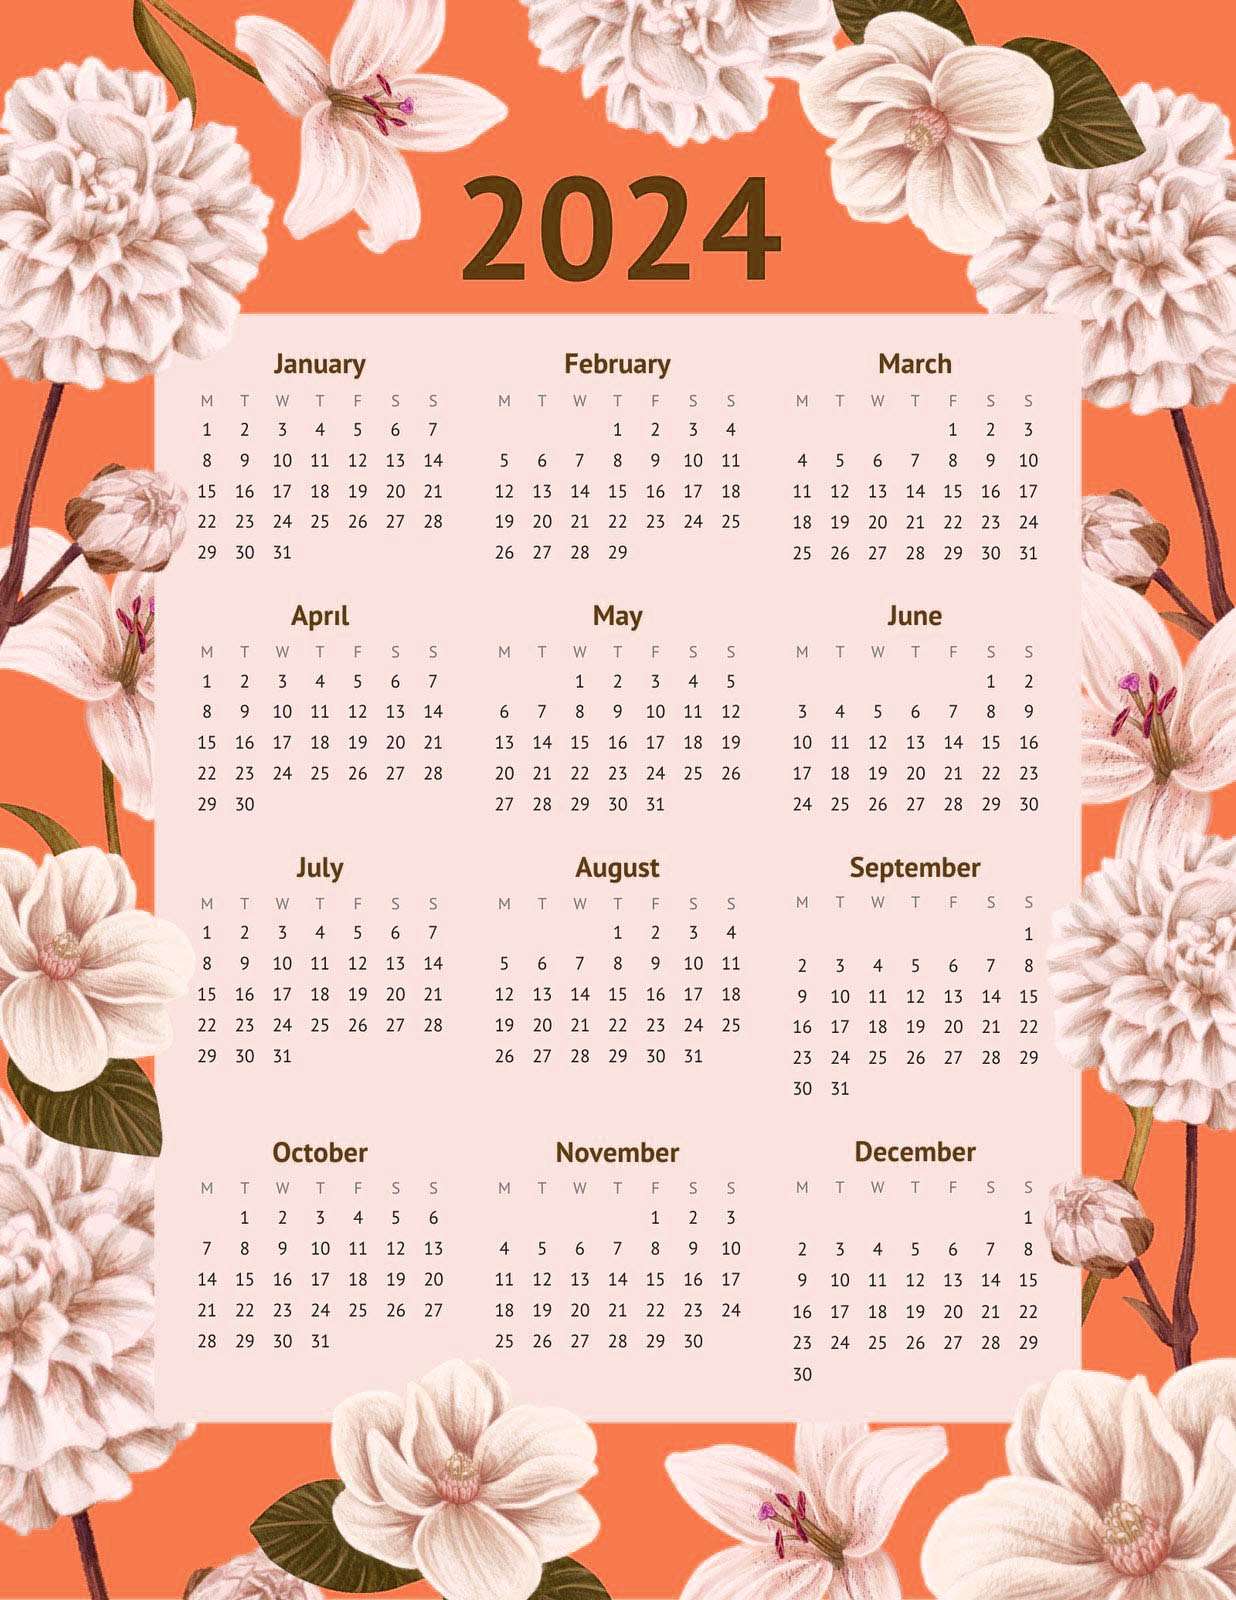 2024 Calendar End-of-Year Plans